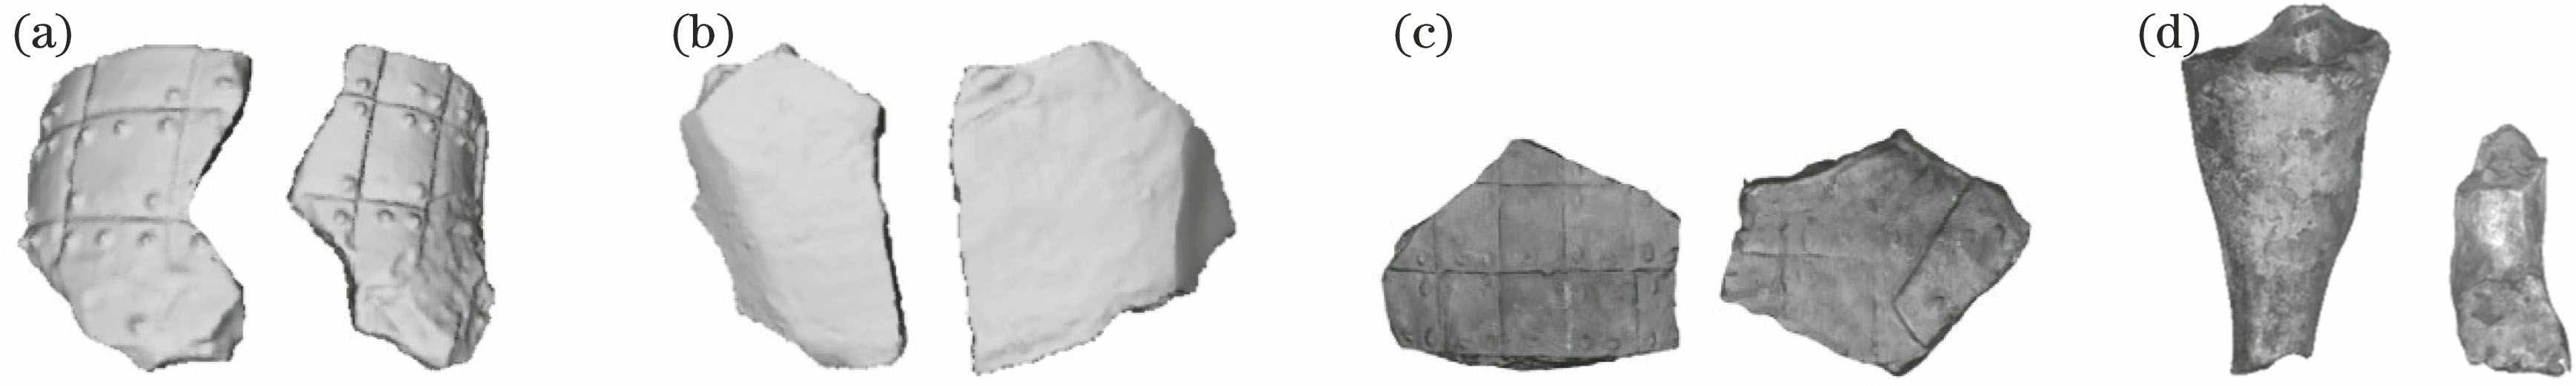 Terracotta blocks. (a) Group 1; (b) group 2; (c) group 3; (d) group 4